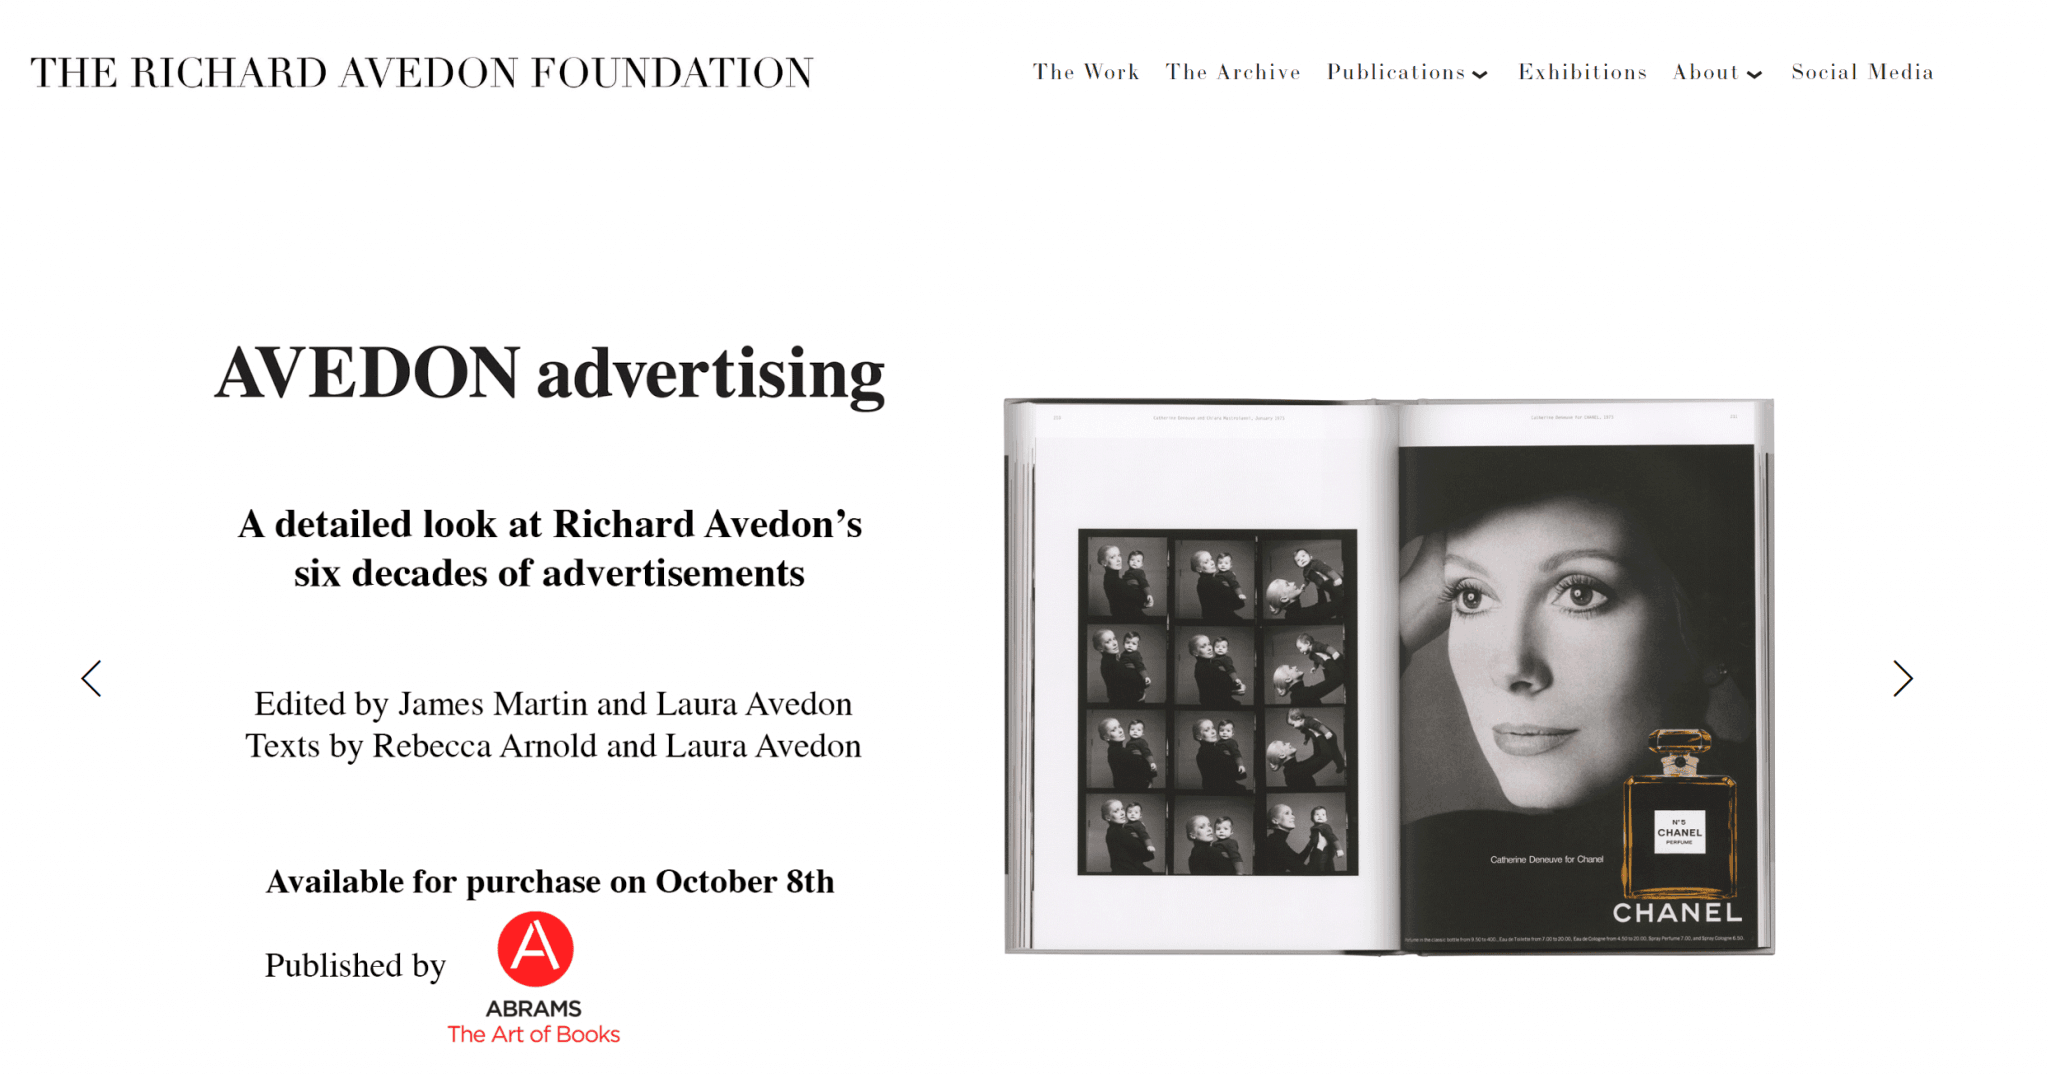 Richard Avedon foundation website